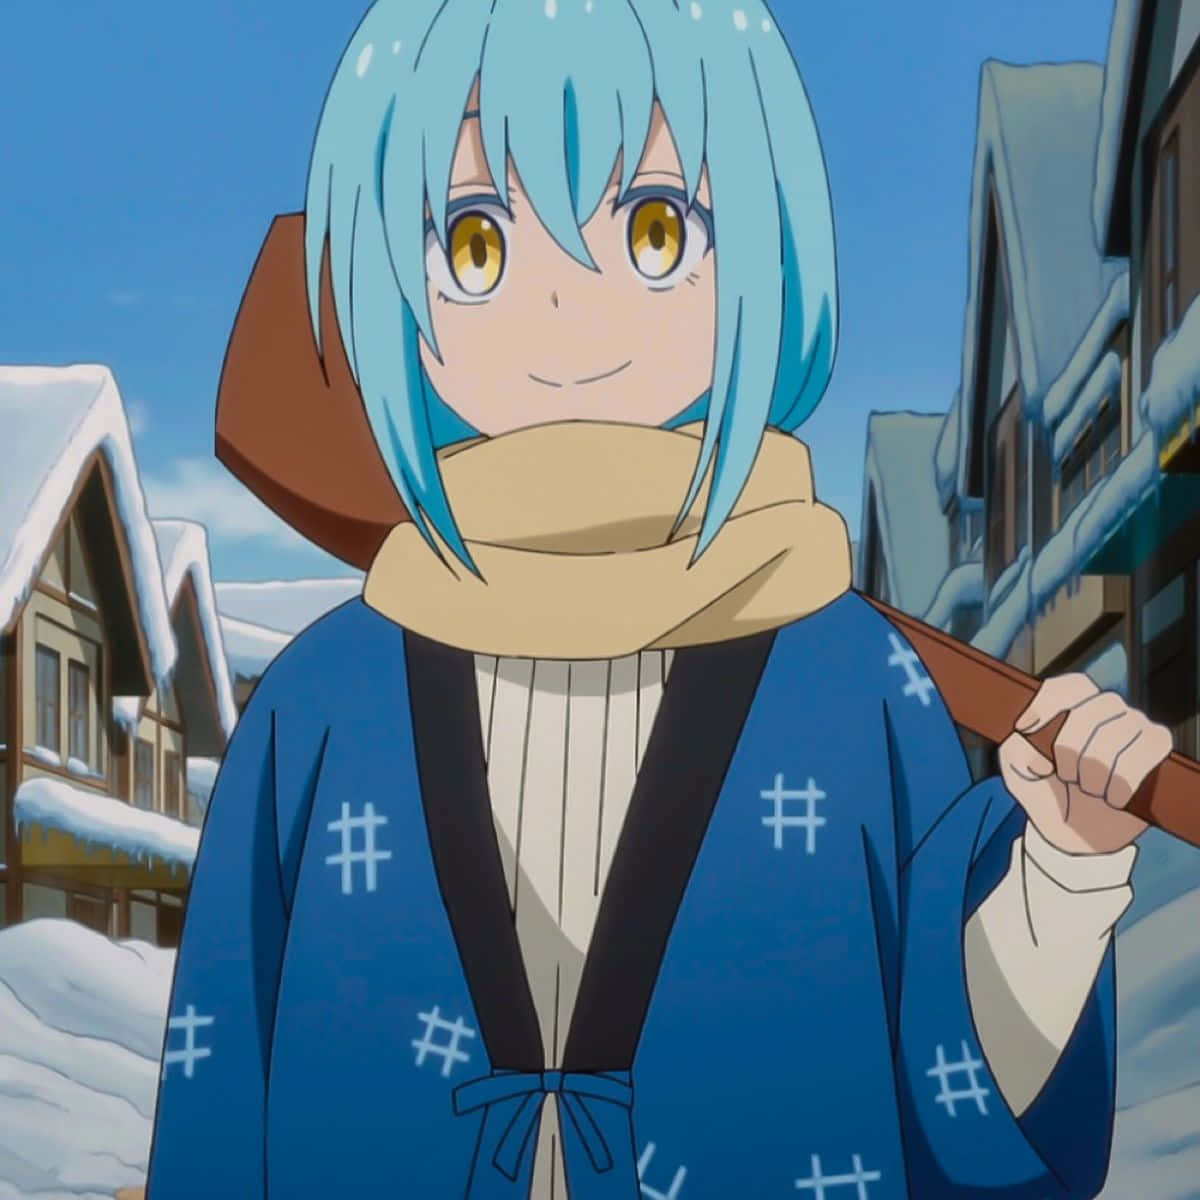 Rimuru Pfp With Winter Clothes Background